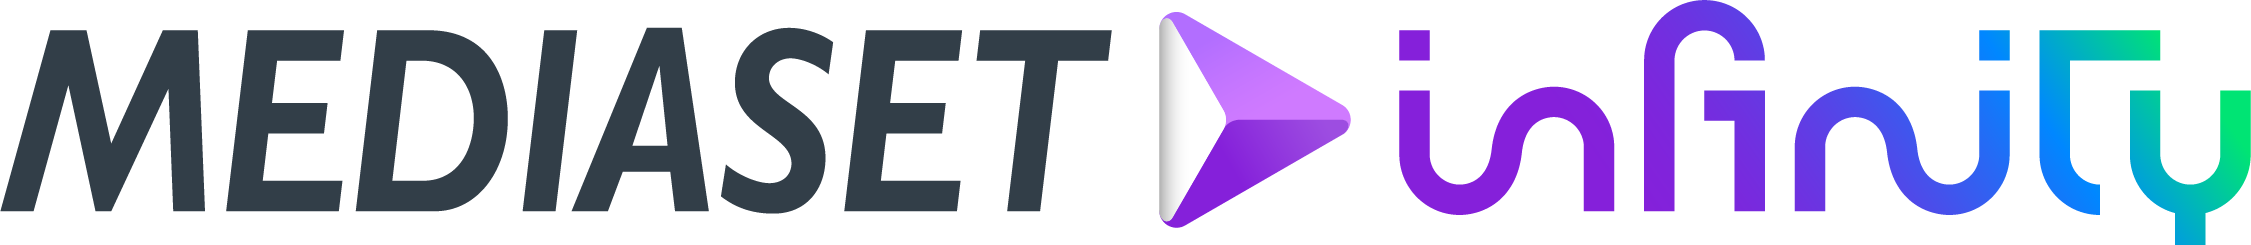 Mediaset_Infinity logo